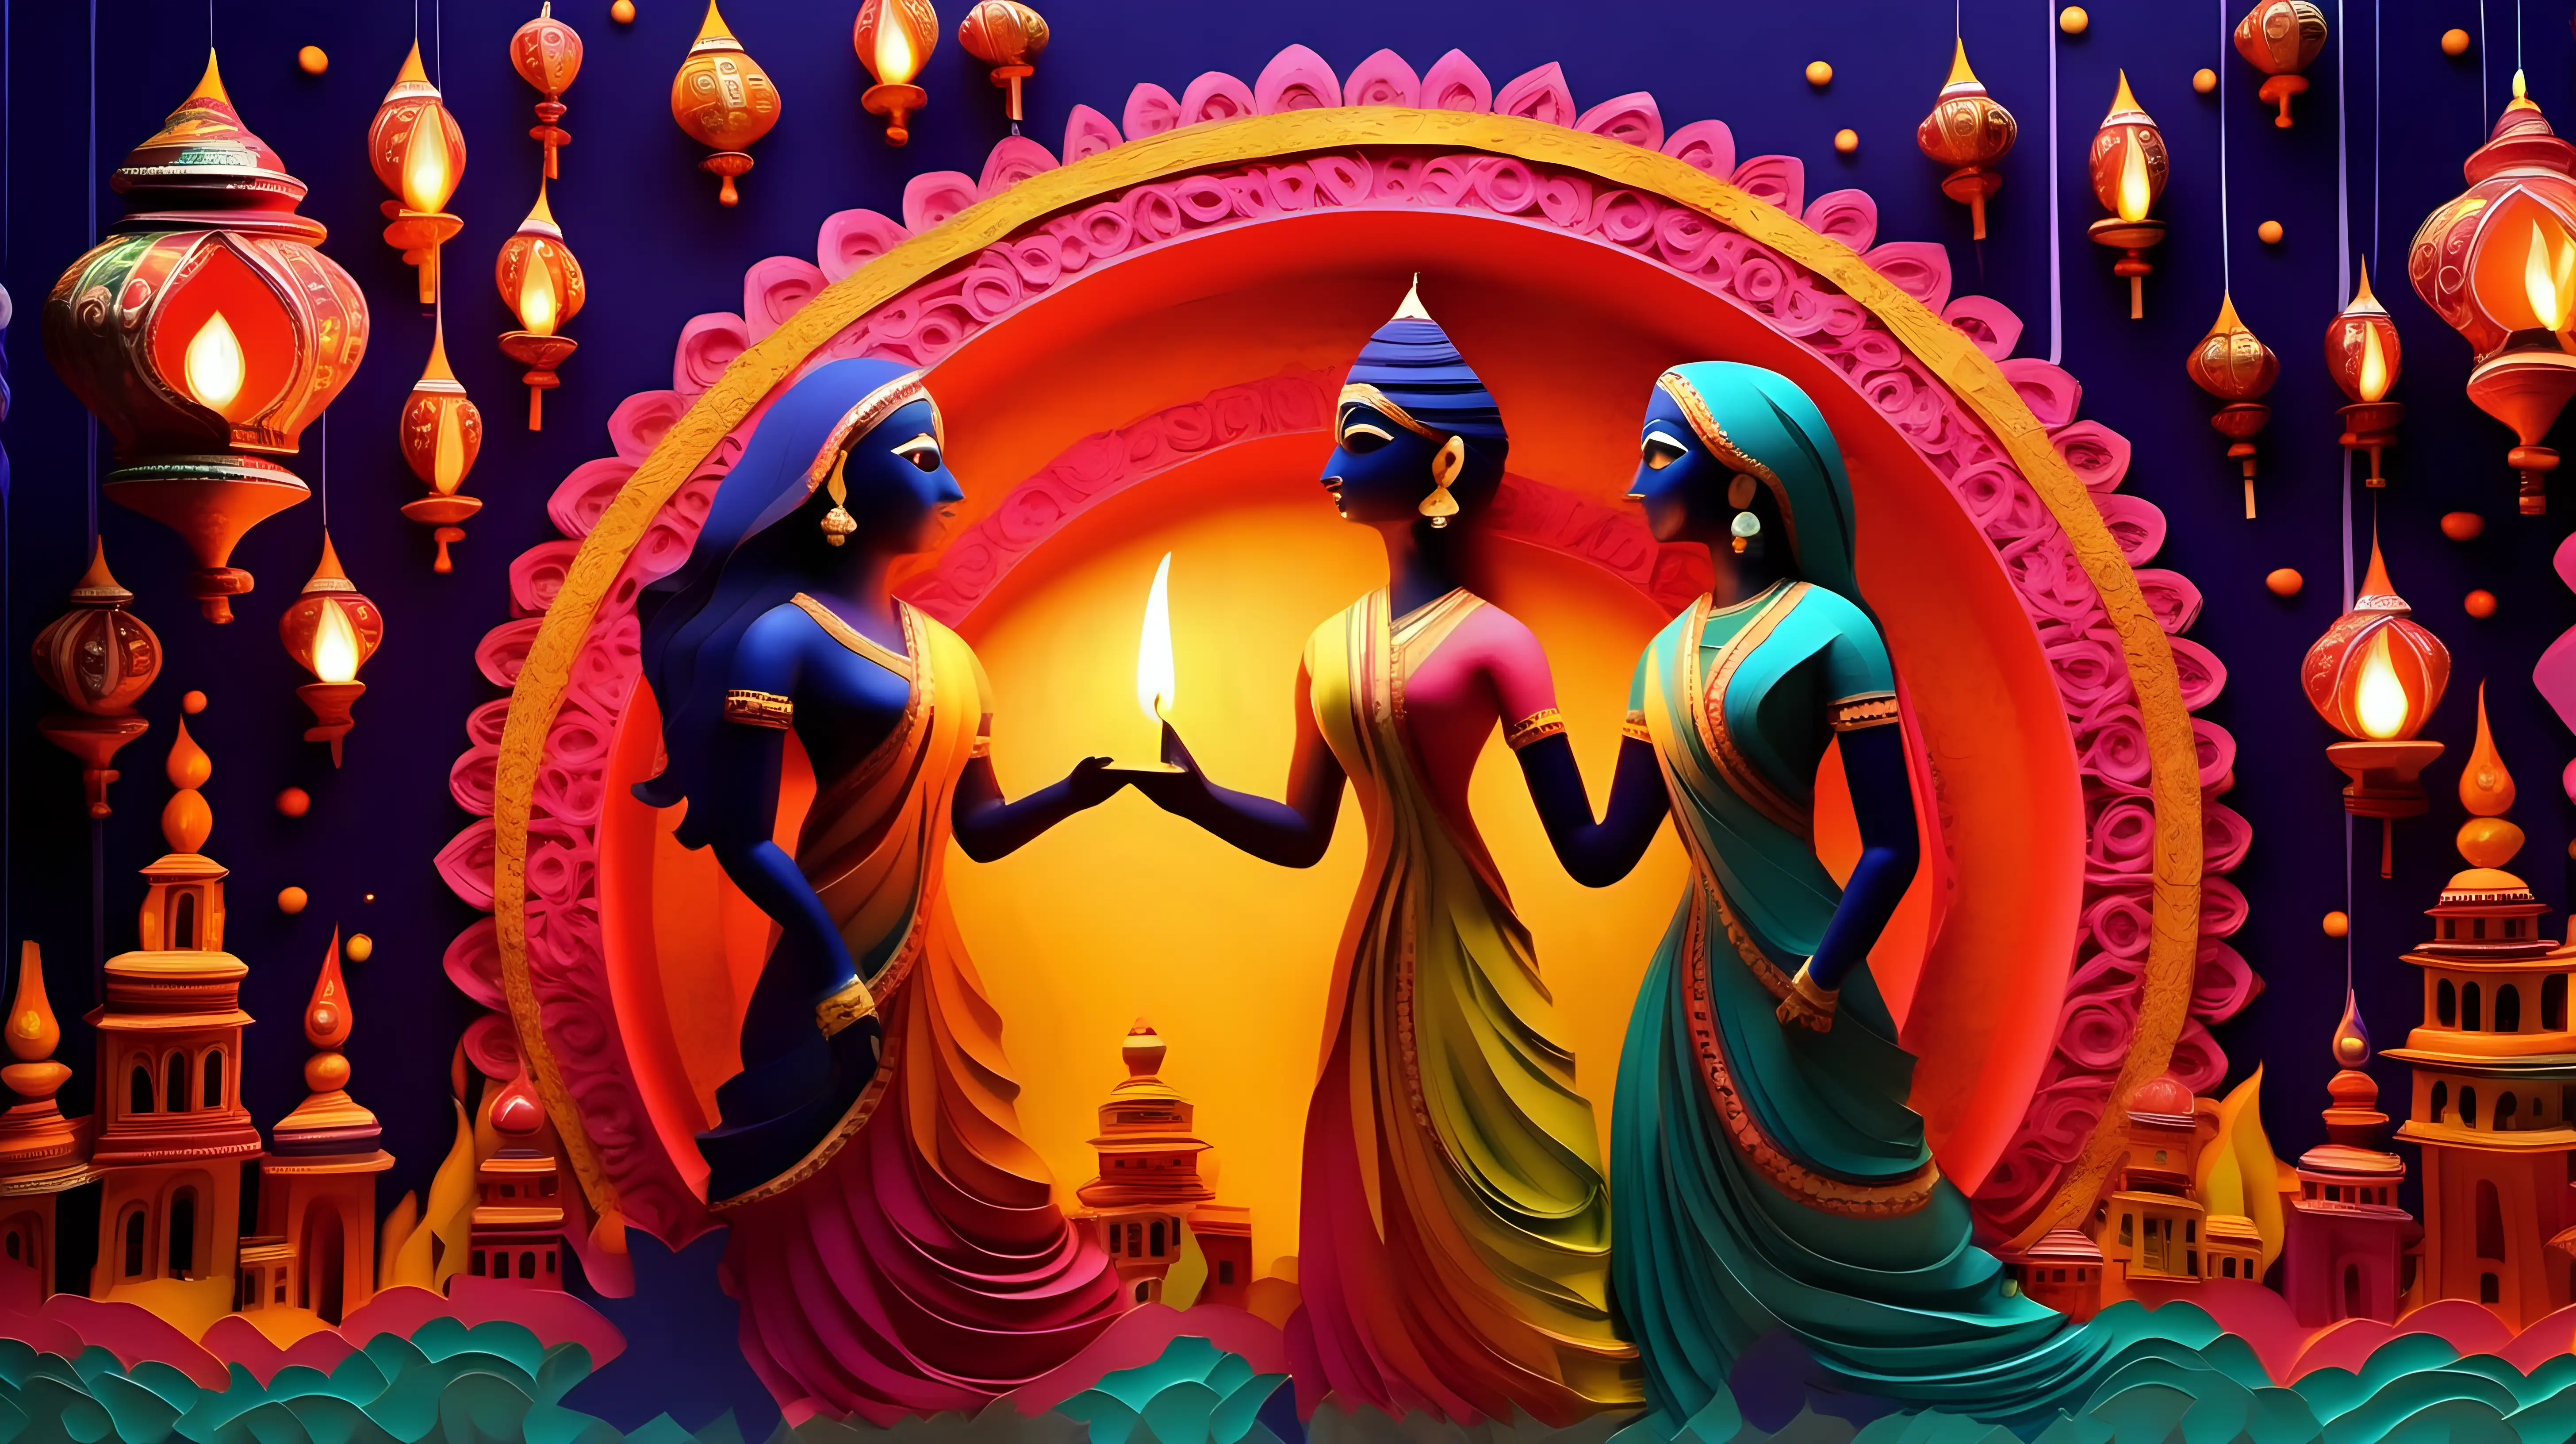 Surreal Diwali Lanterns Abstract Paper Craft with Magical Kalamkari Art